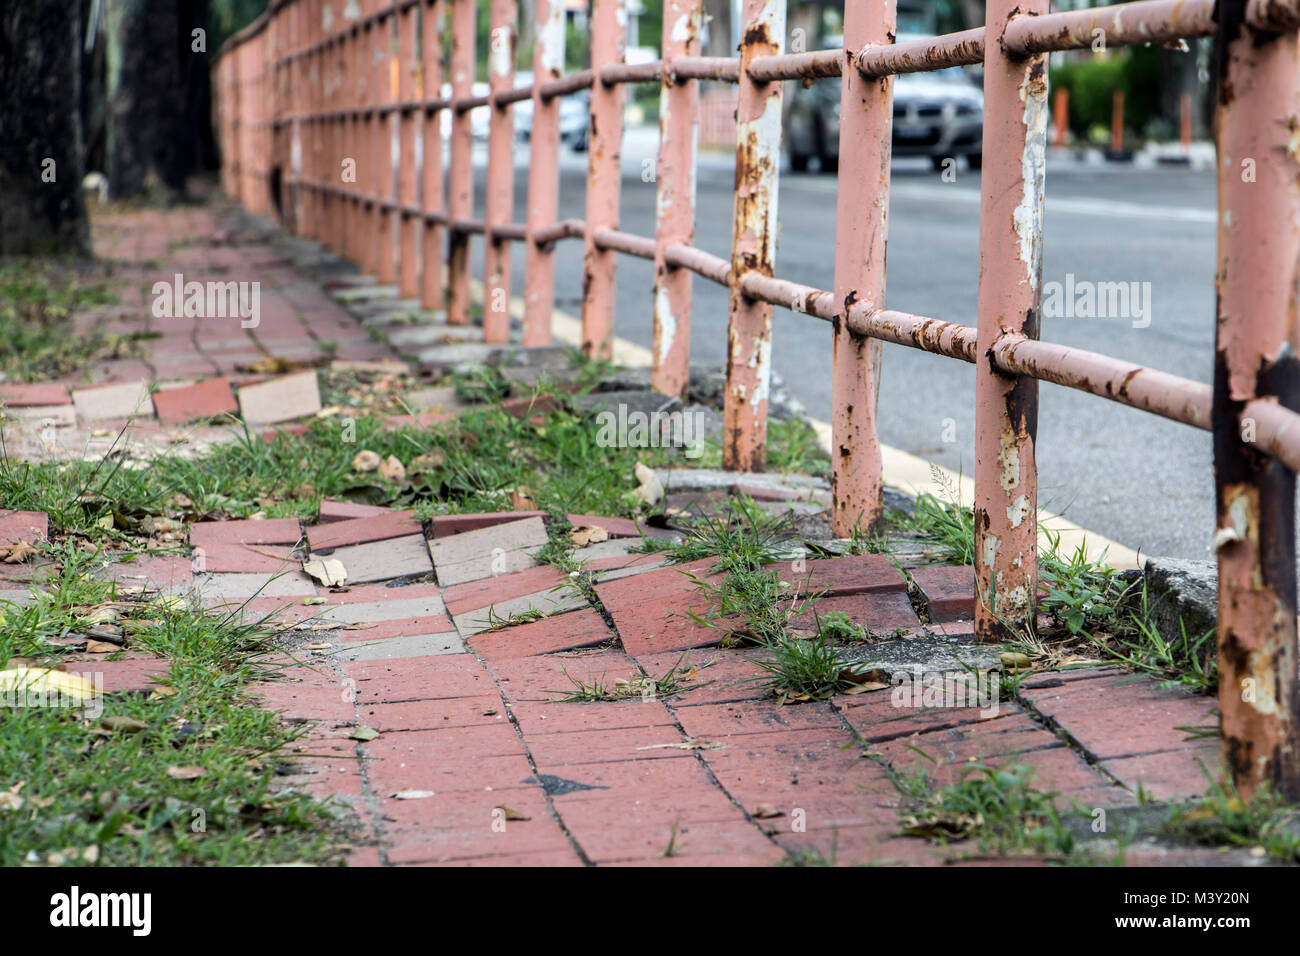 Broken walkway in Penang city. Damaged pavement on street. Stock Photo